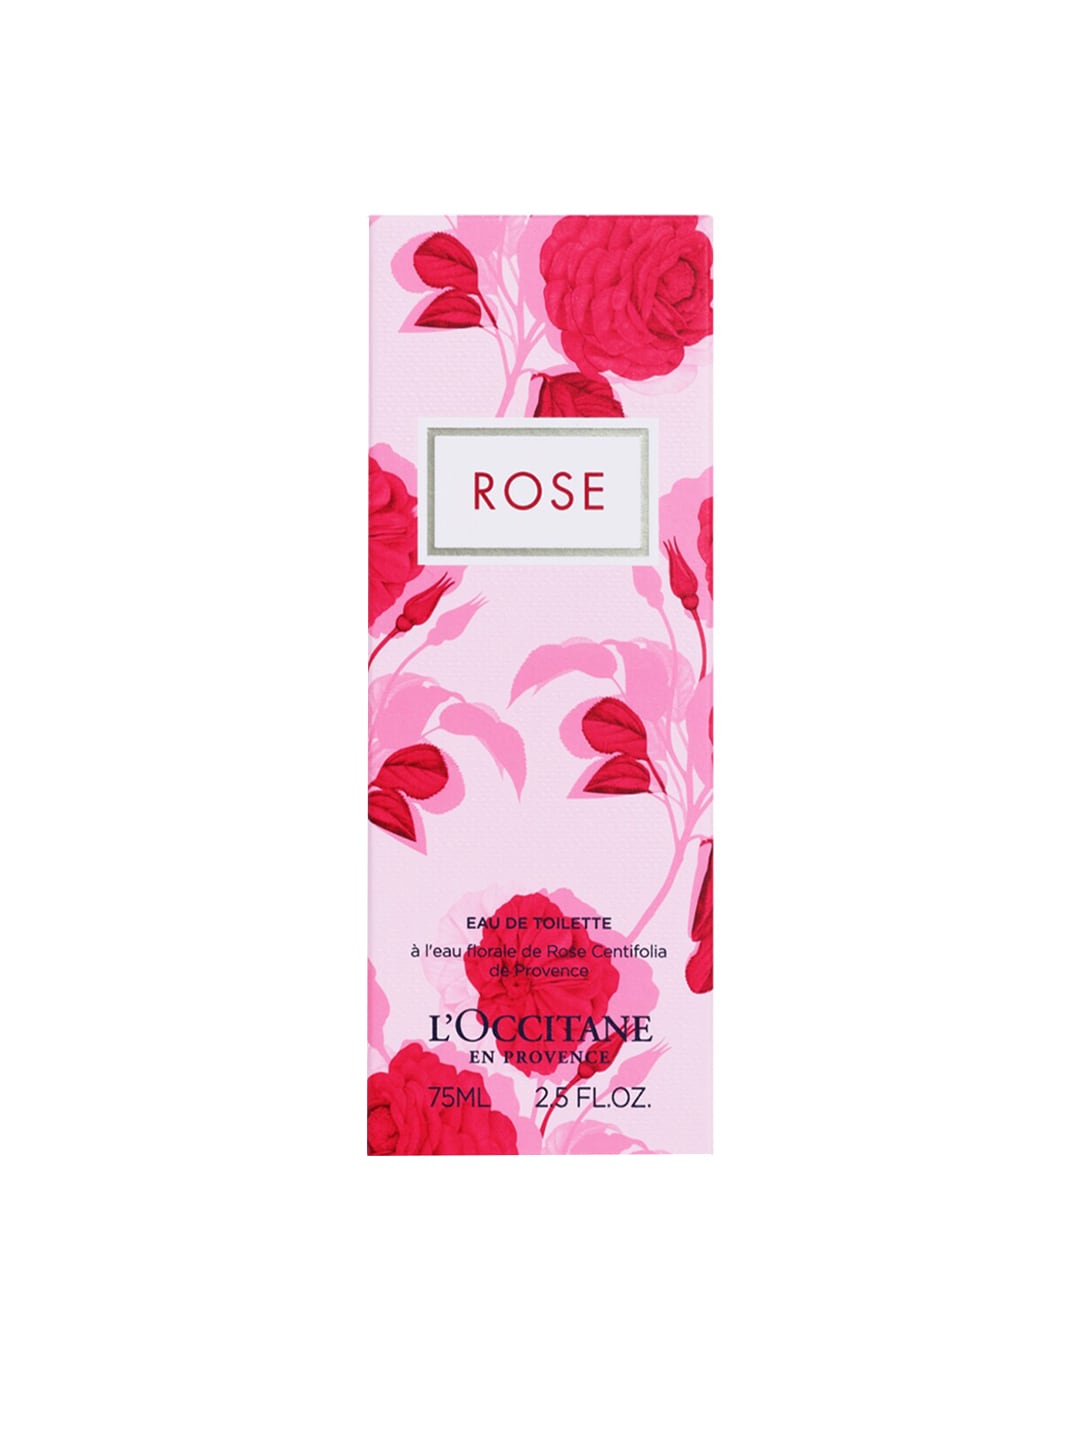 LOccitane en Provence Rose Eau De Toilette 75 ml Price in India